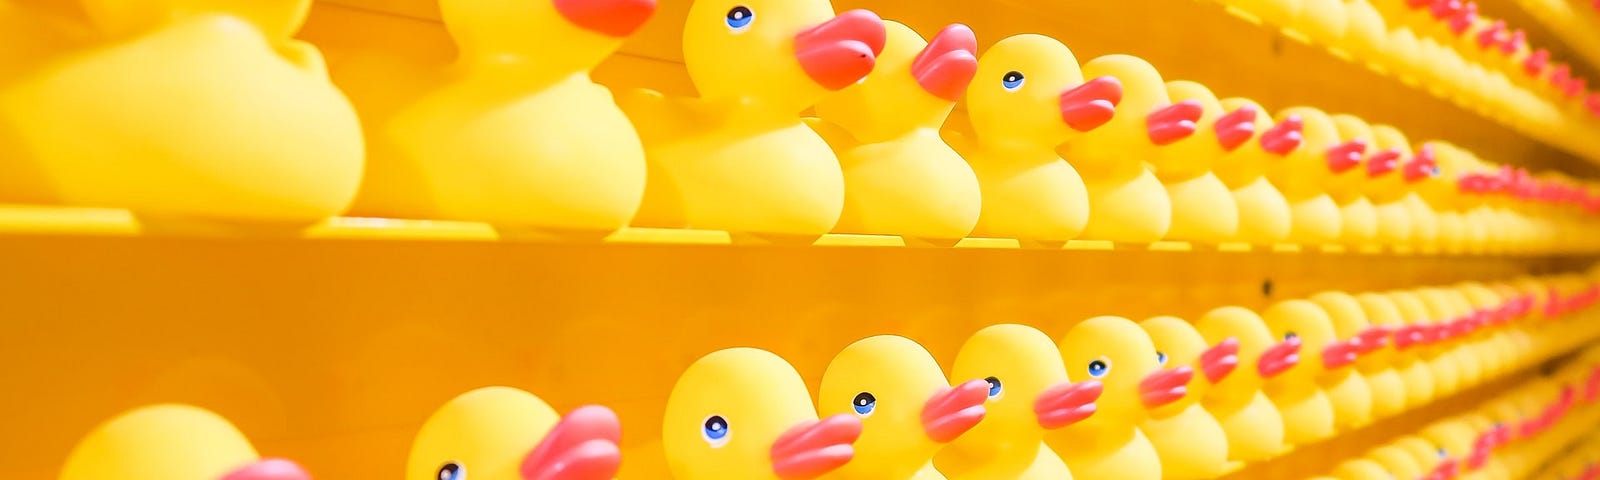 Yellow ducks in rows